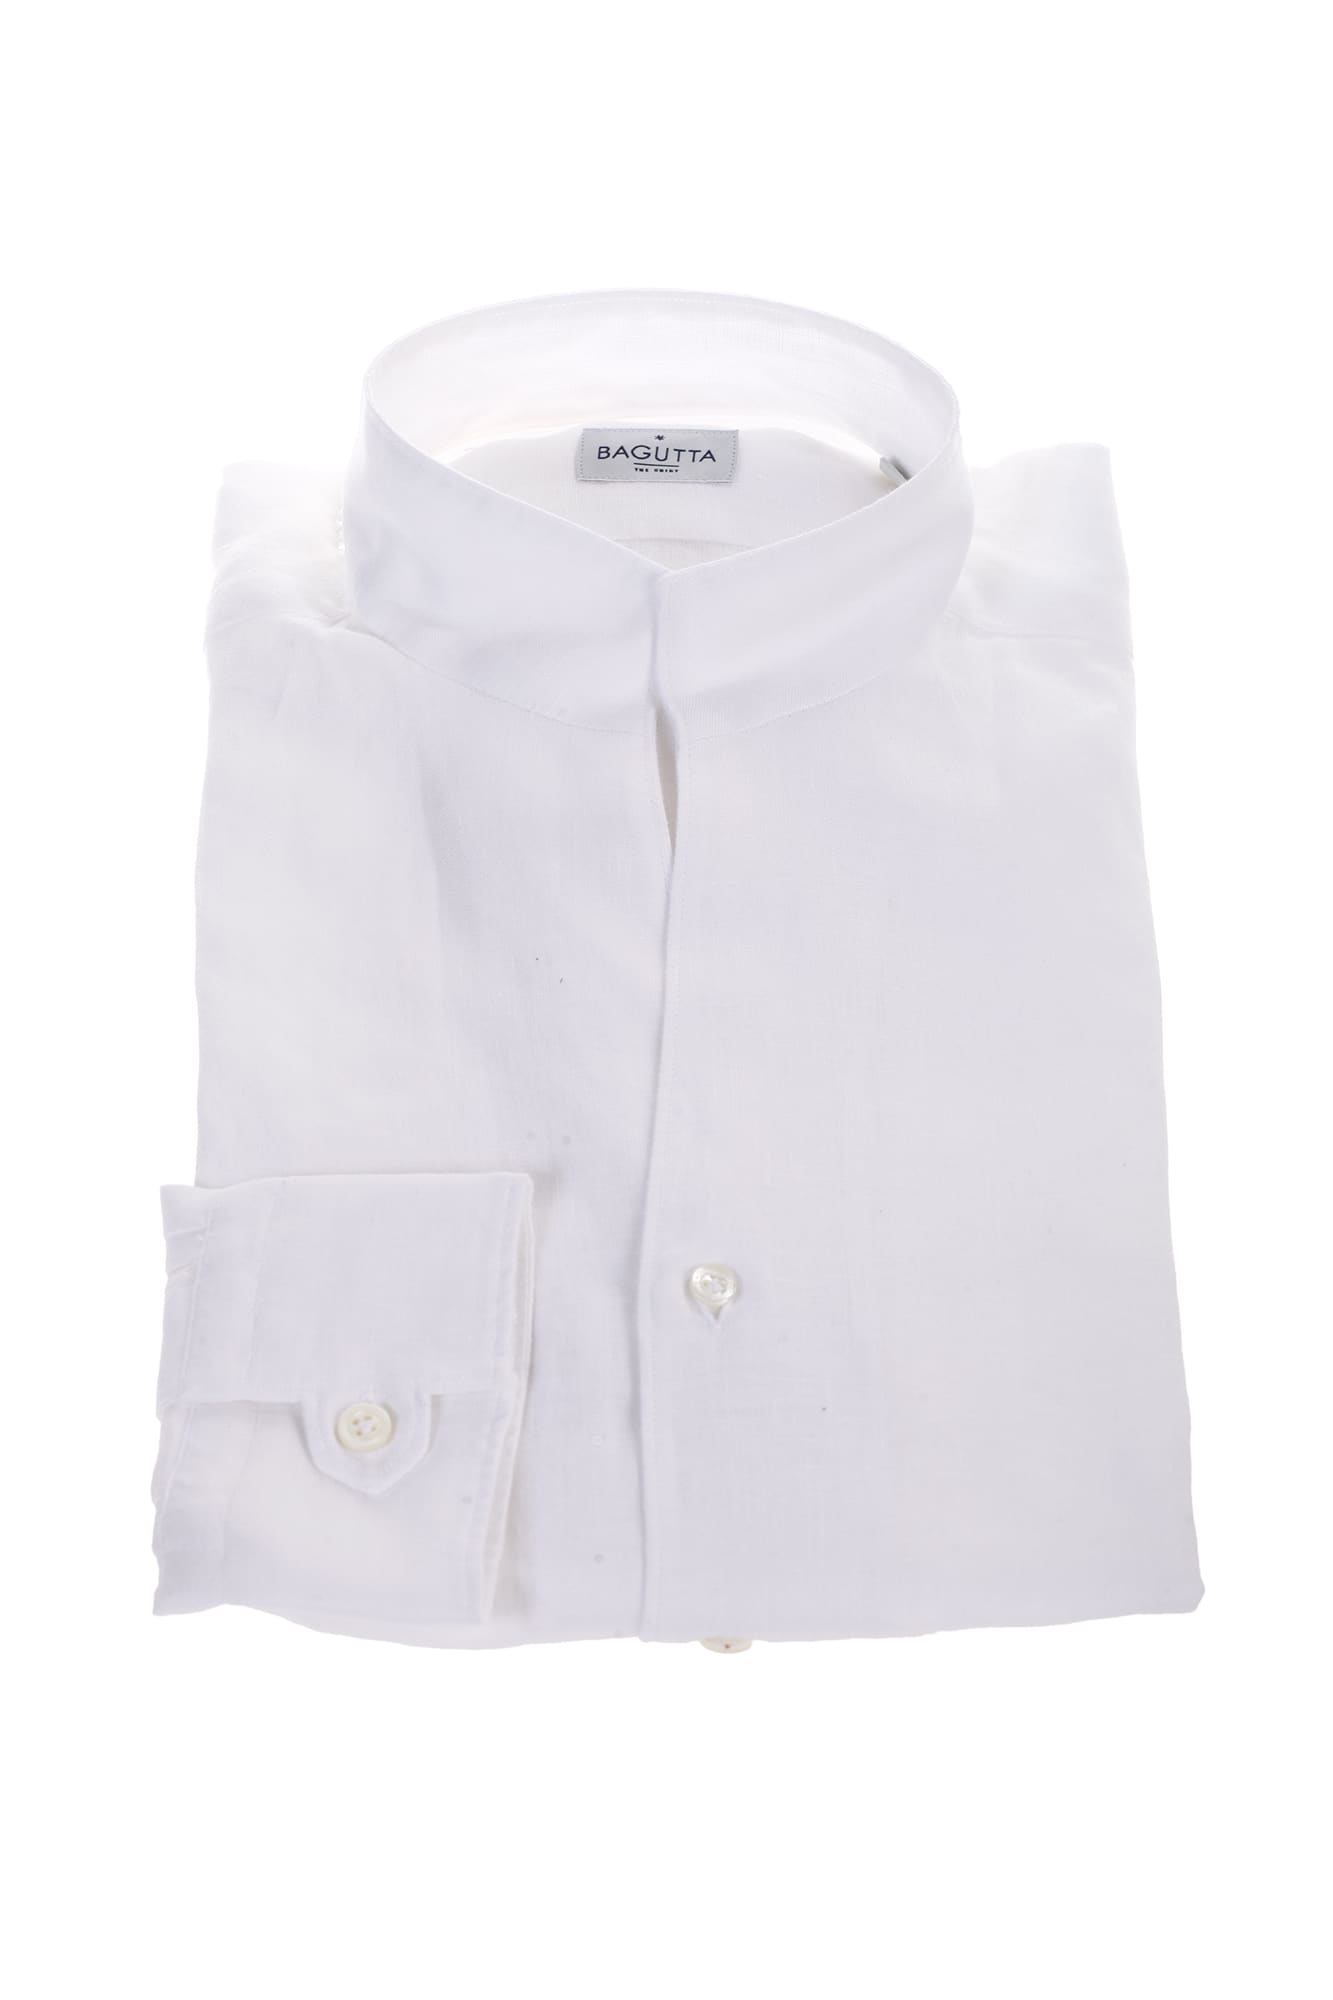 Bagutta white linen shirt